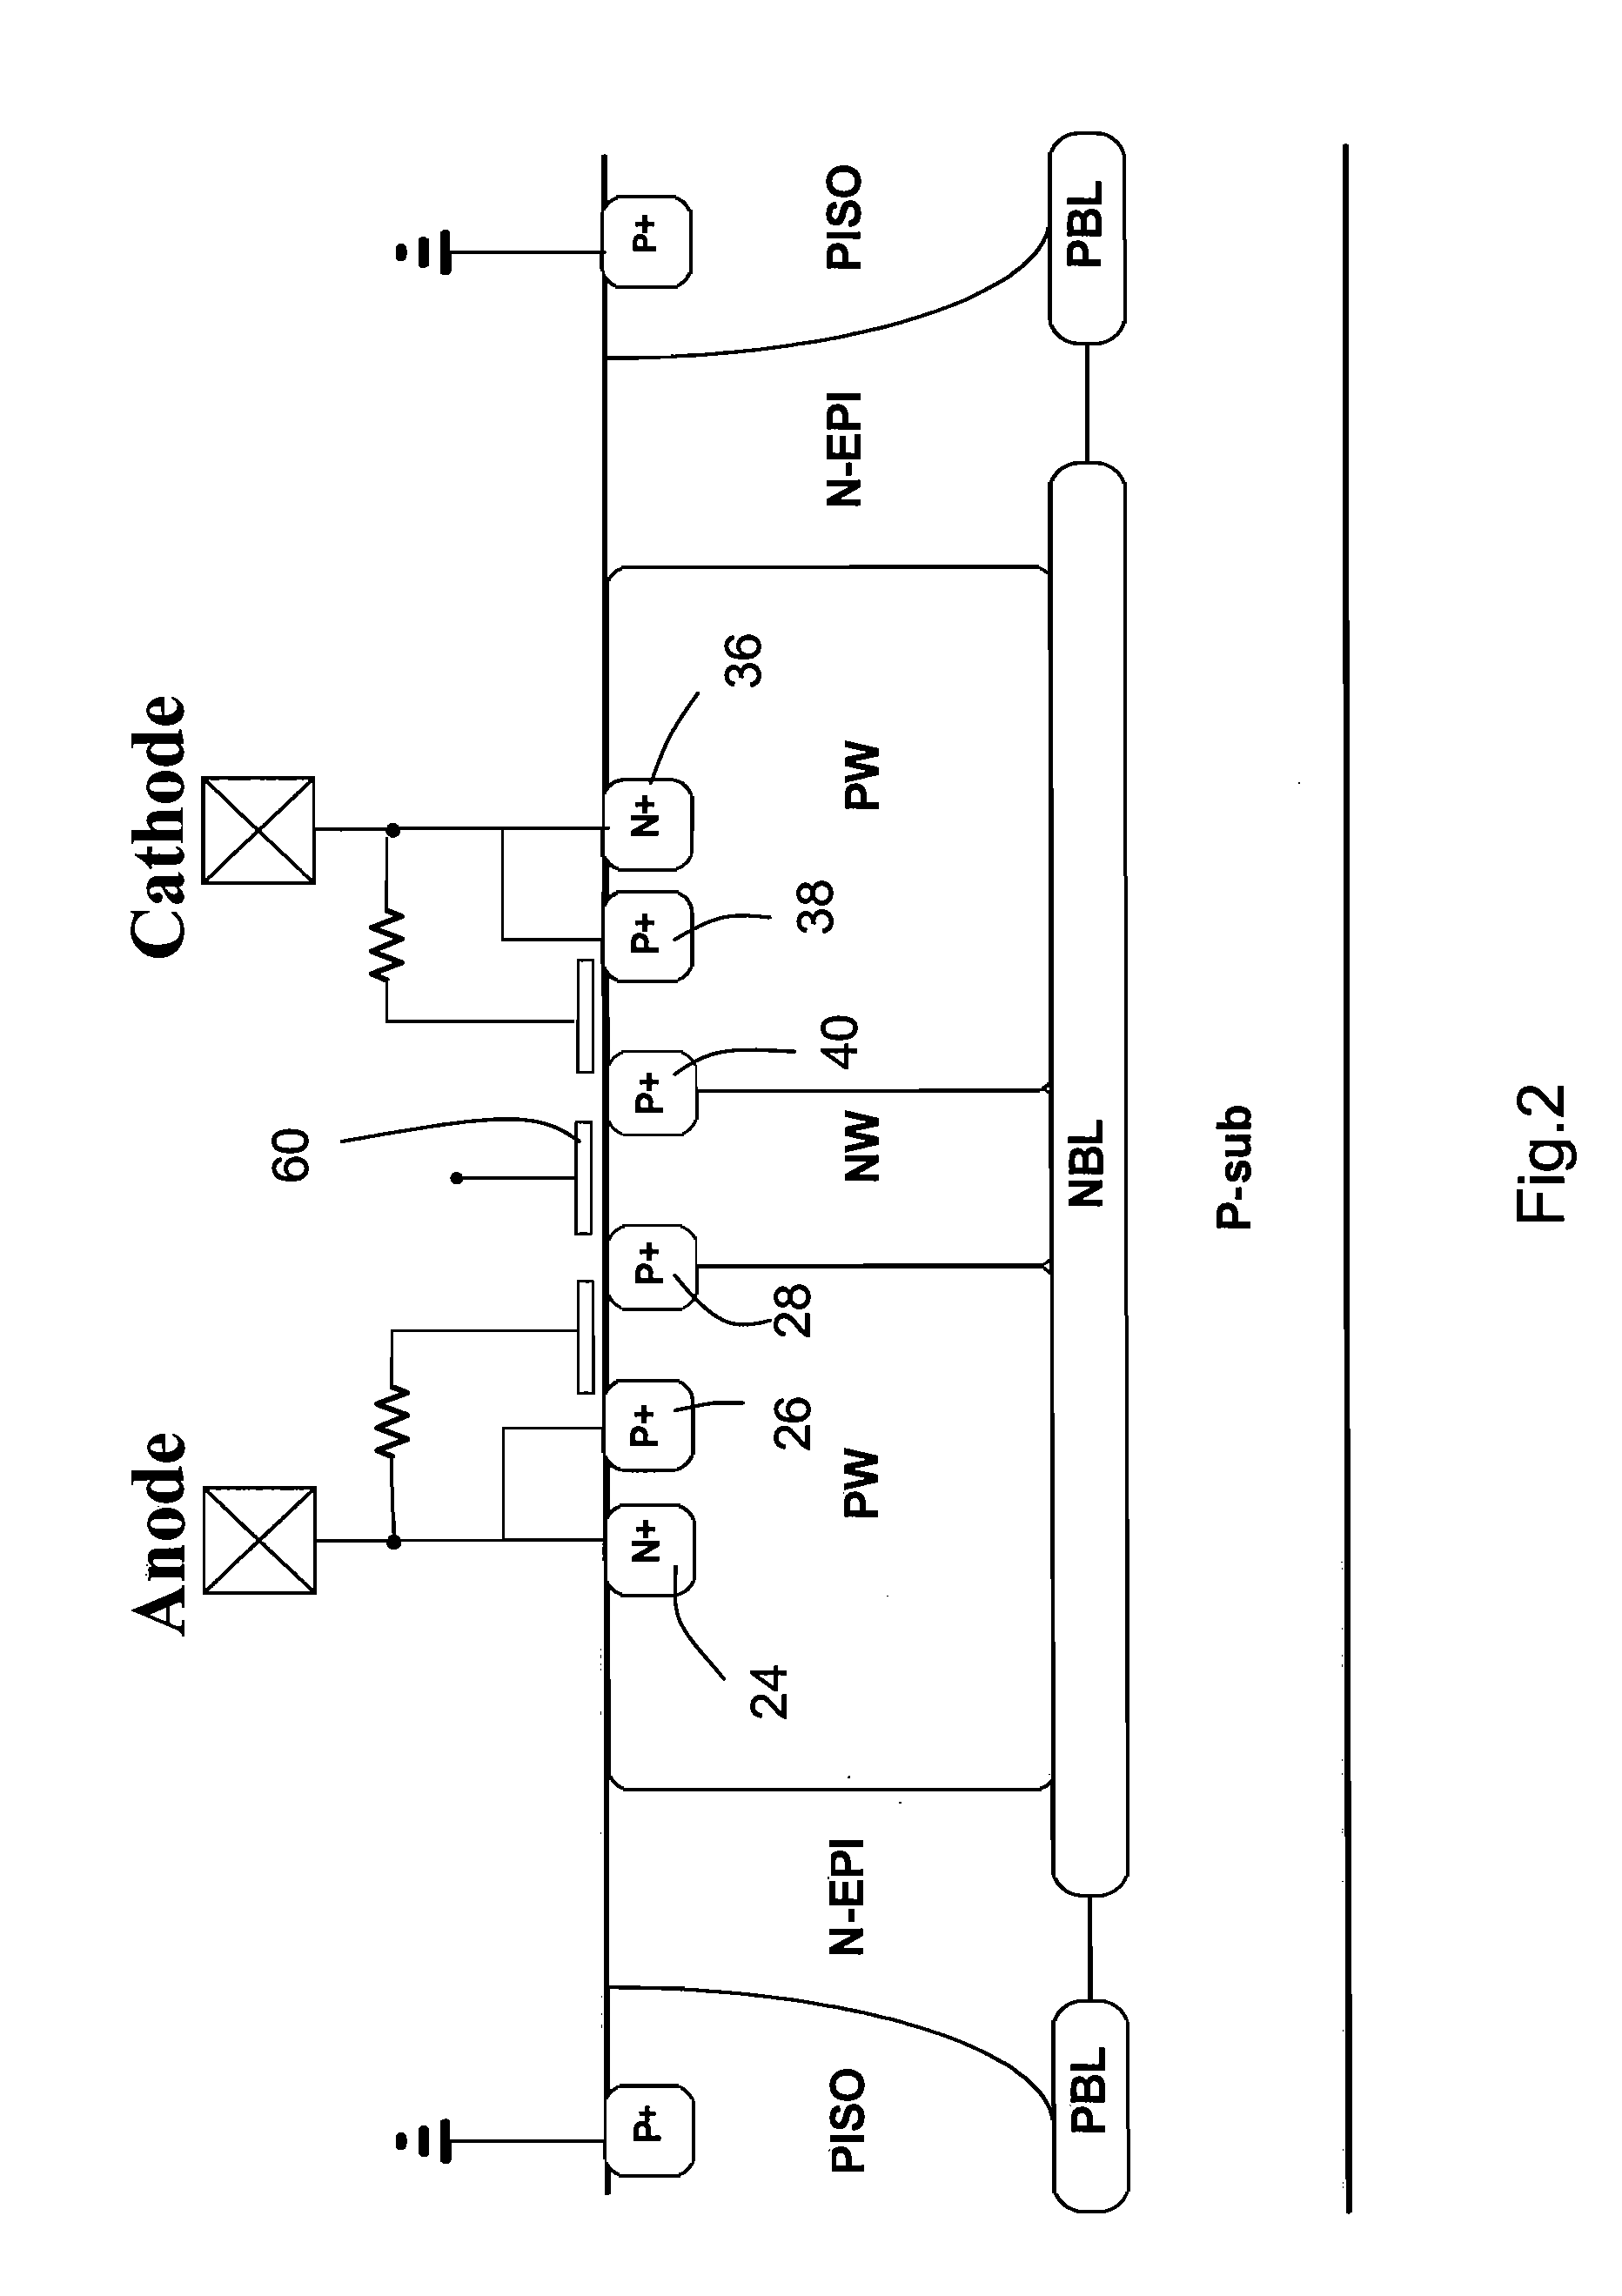 Symmetric bidirectional silicon-controlled rectifier